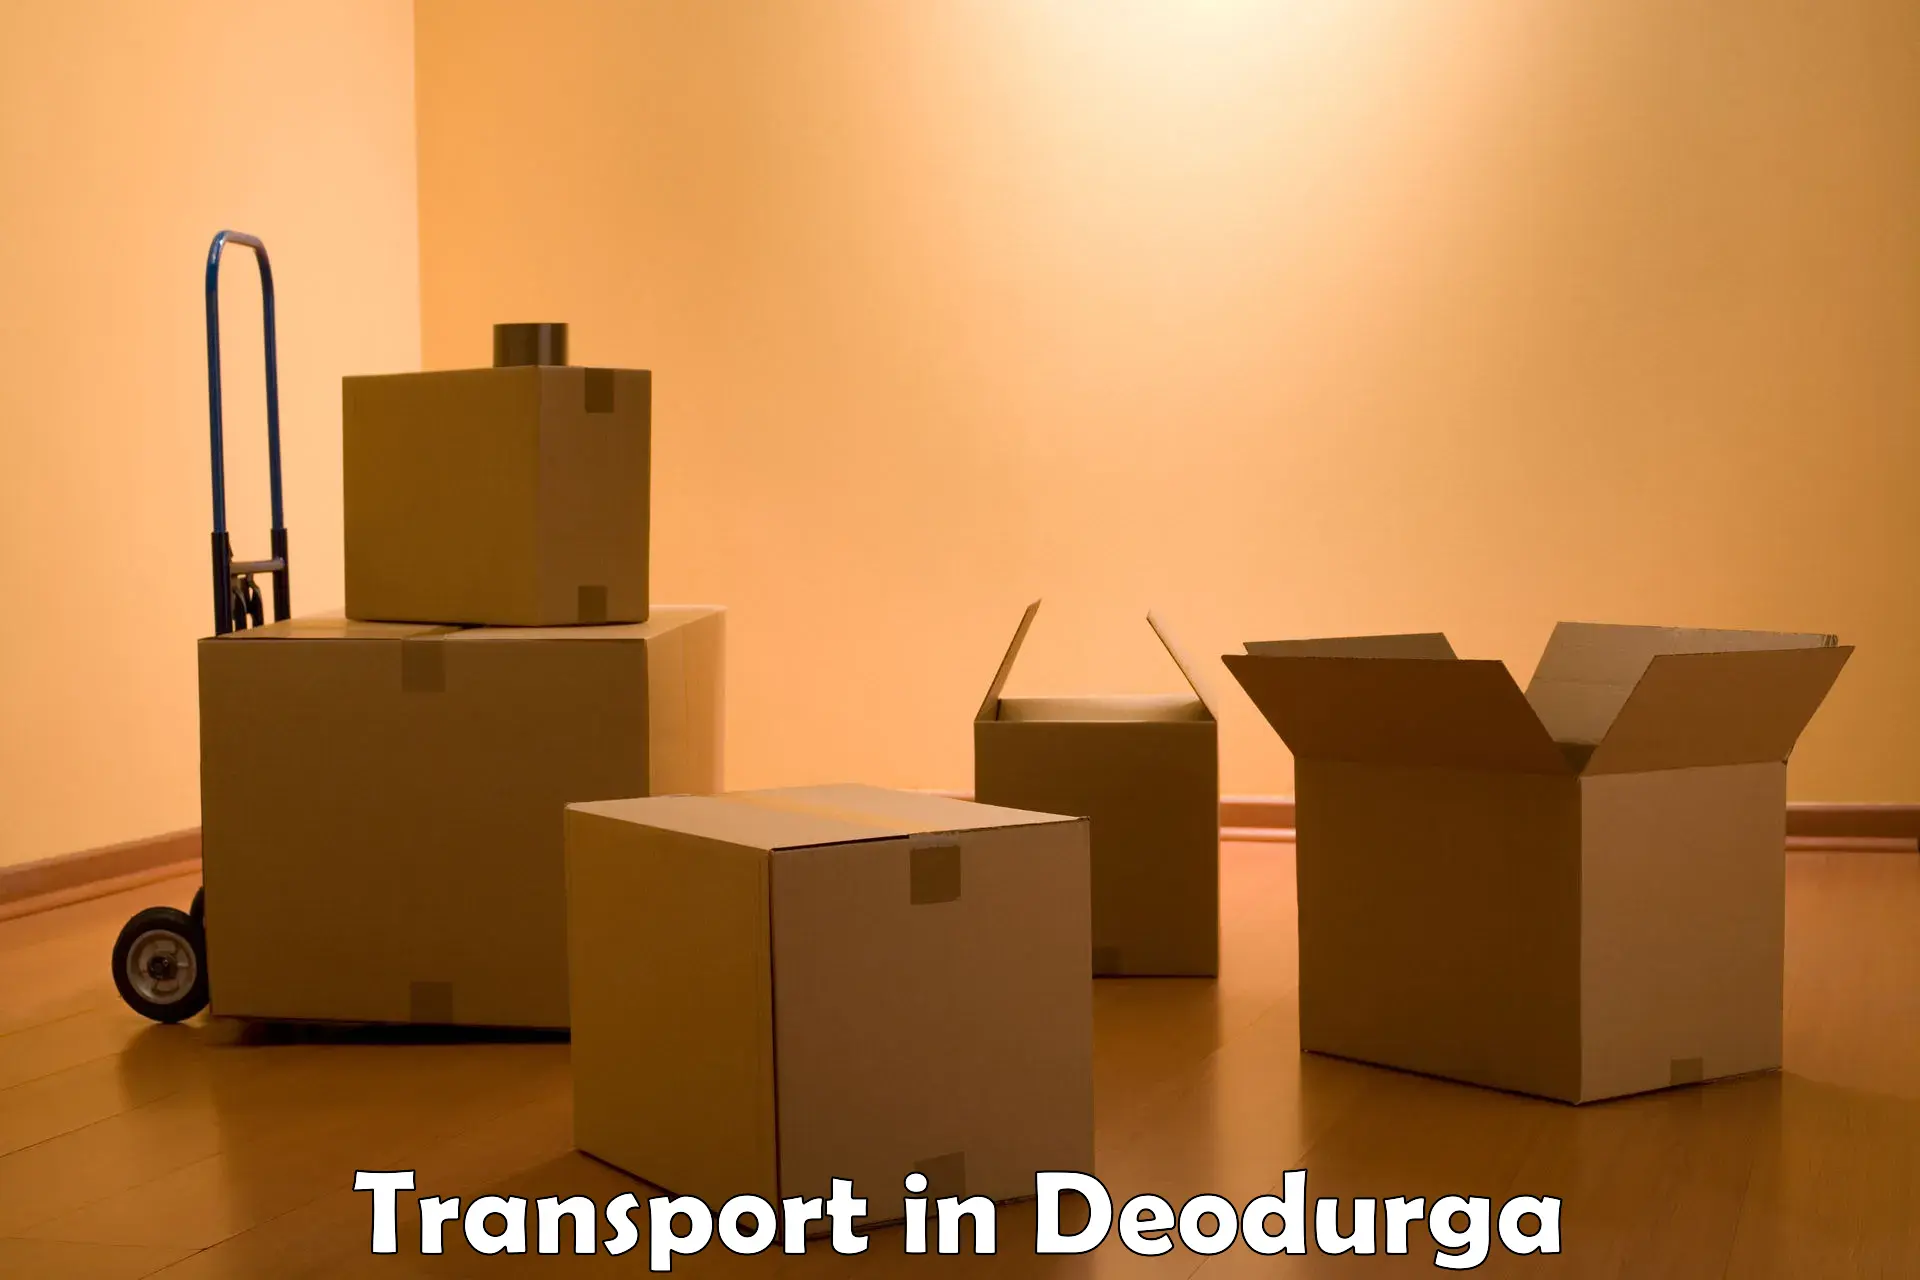 Intercity transport in Deodurga